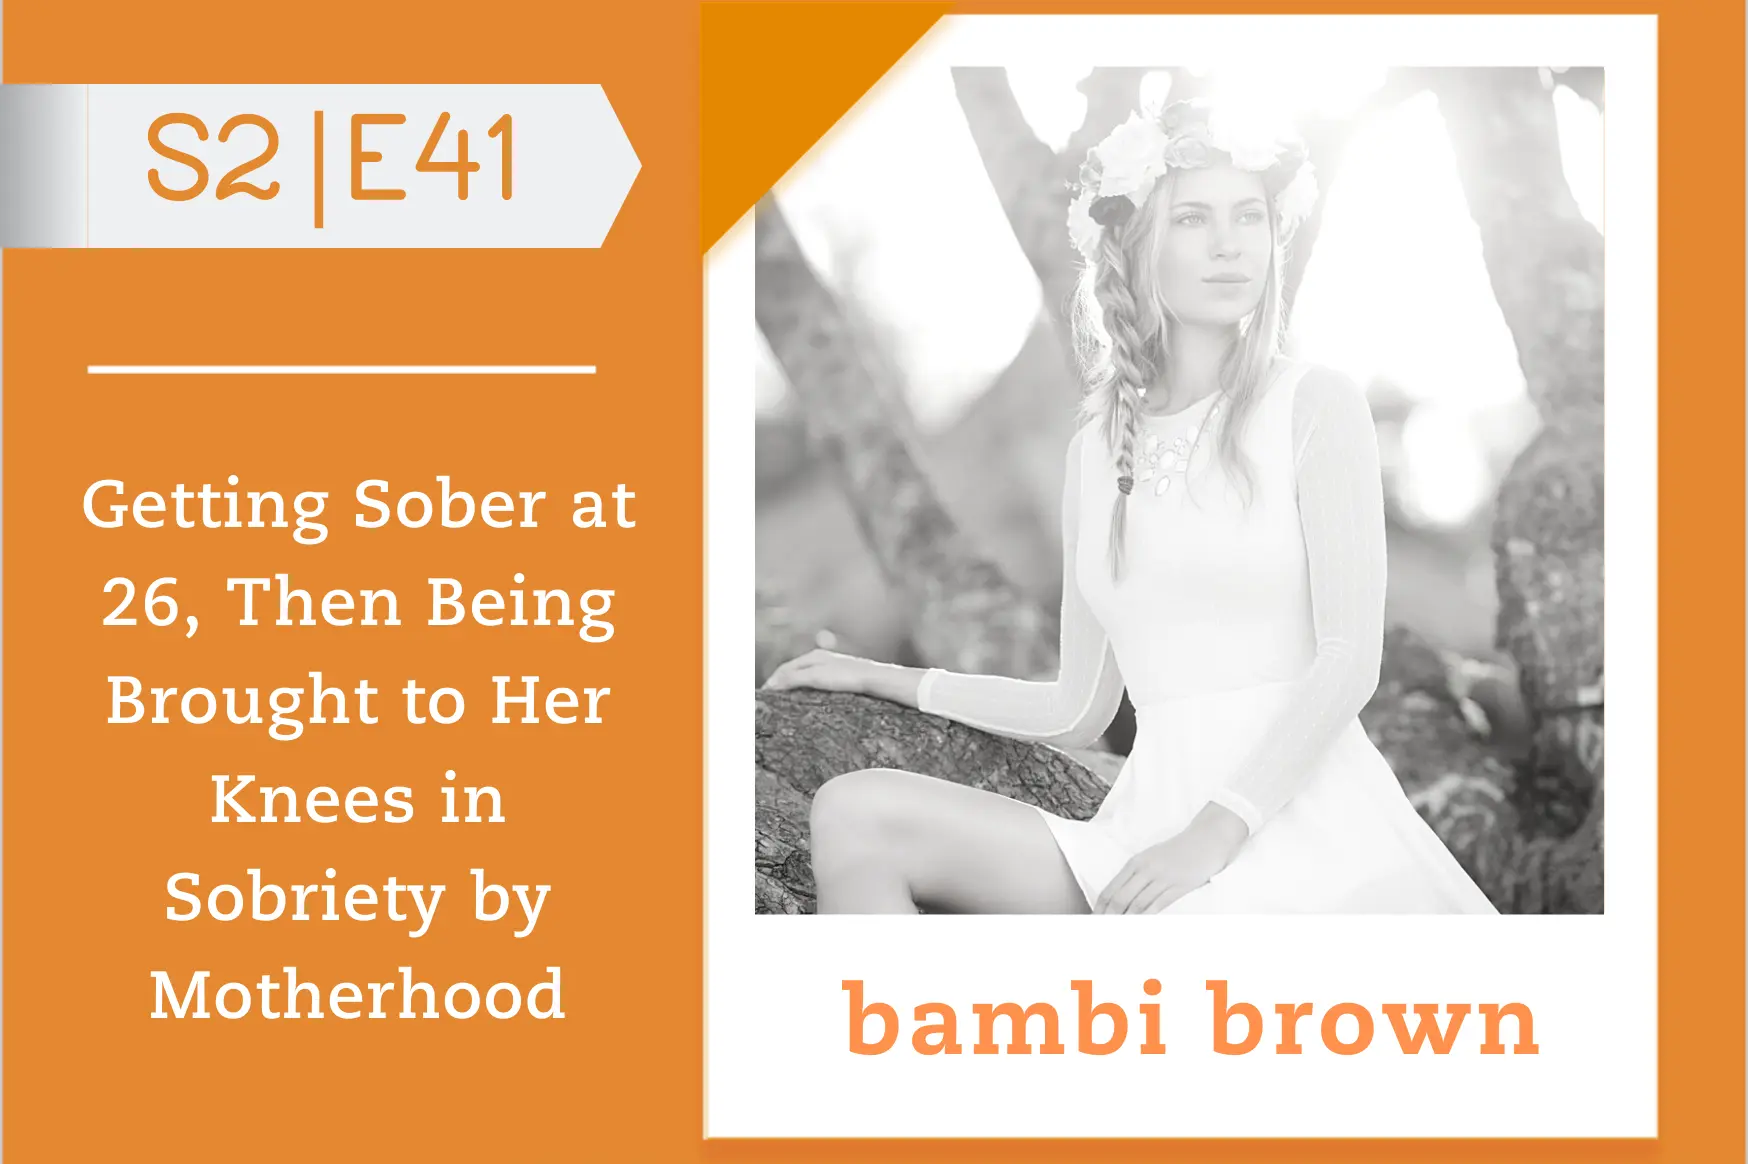 #41 - Bambi Brown